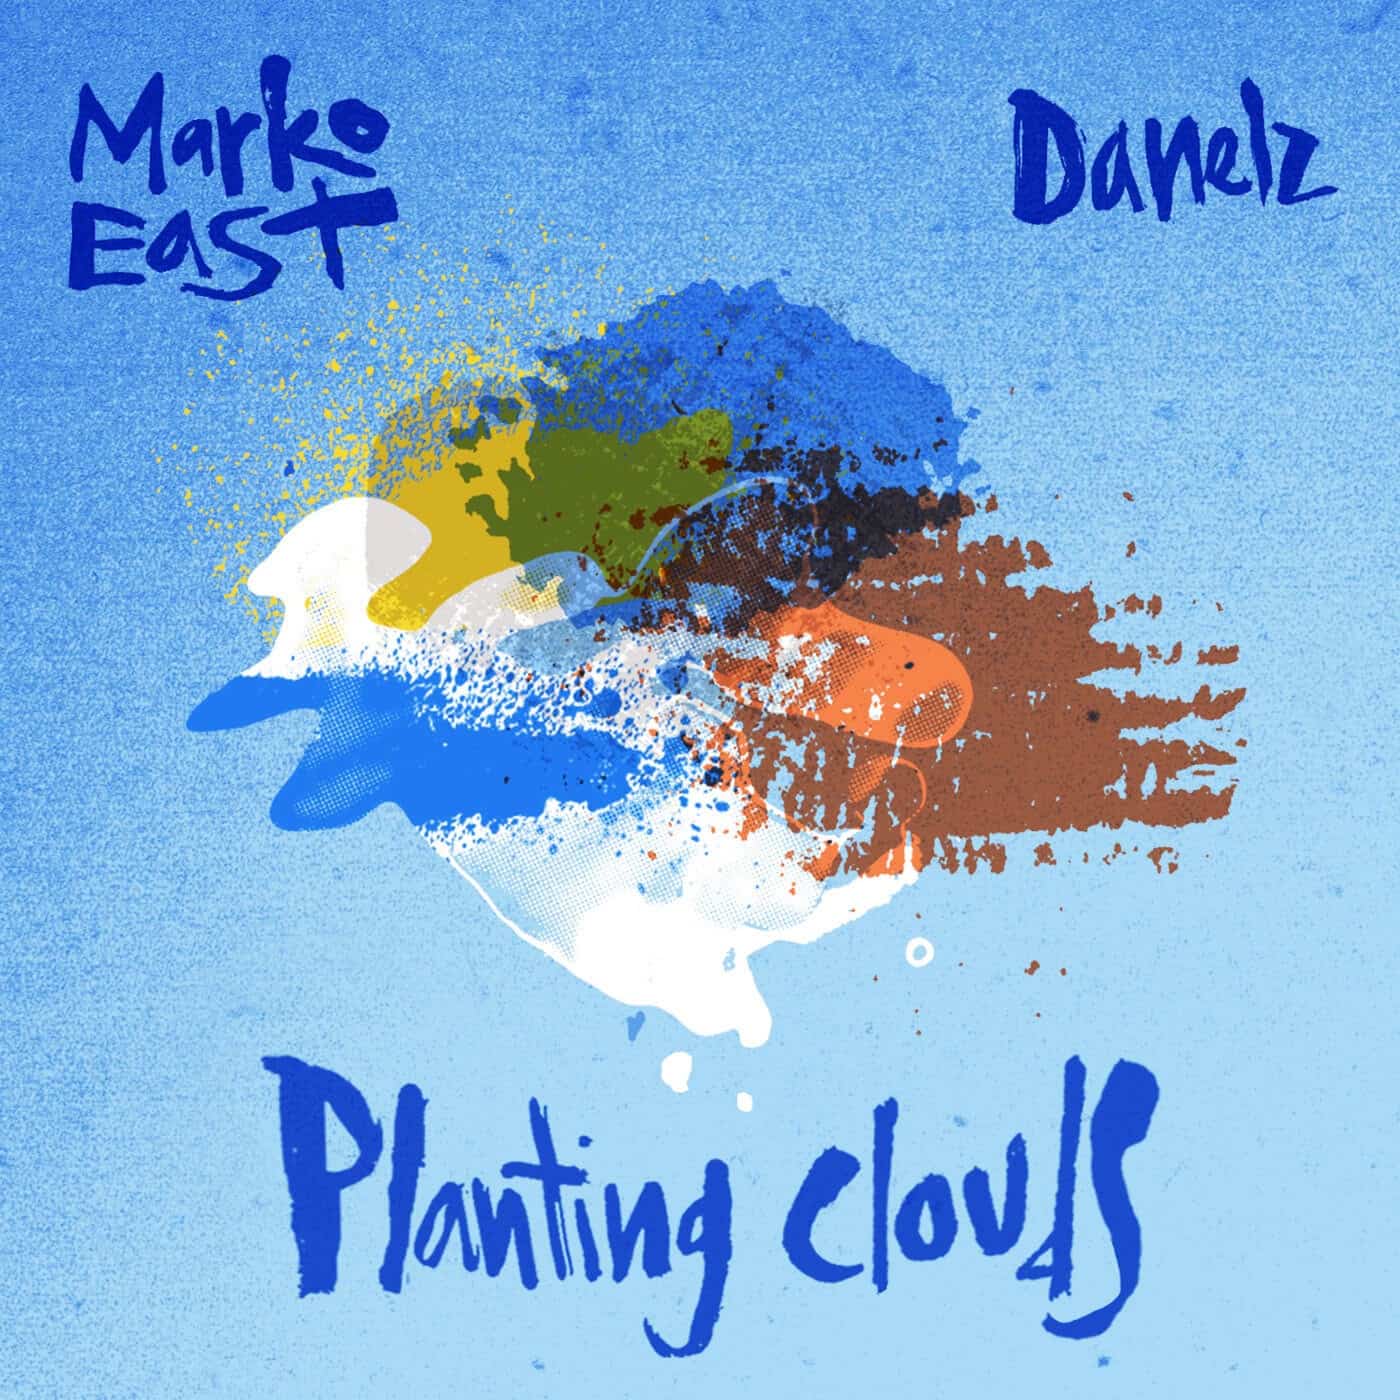 image cover: Marko East, Danelz - Planting Clouds / BS021